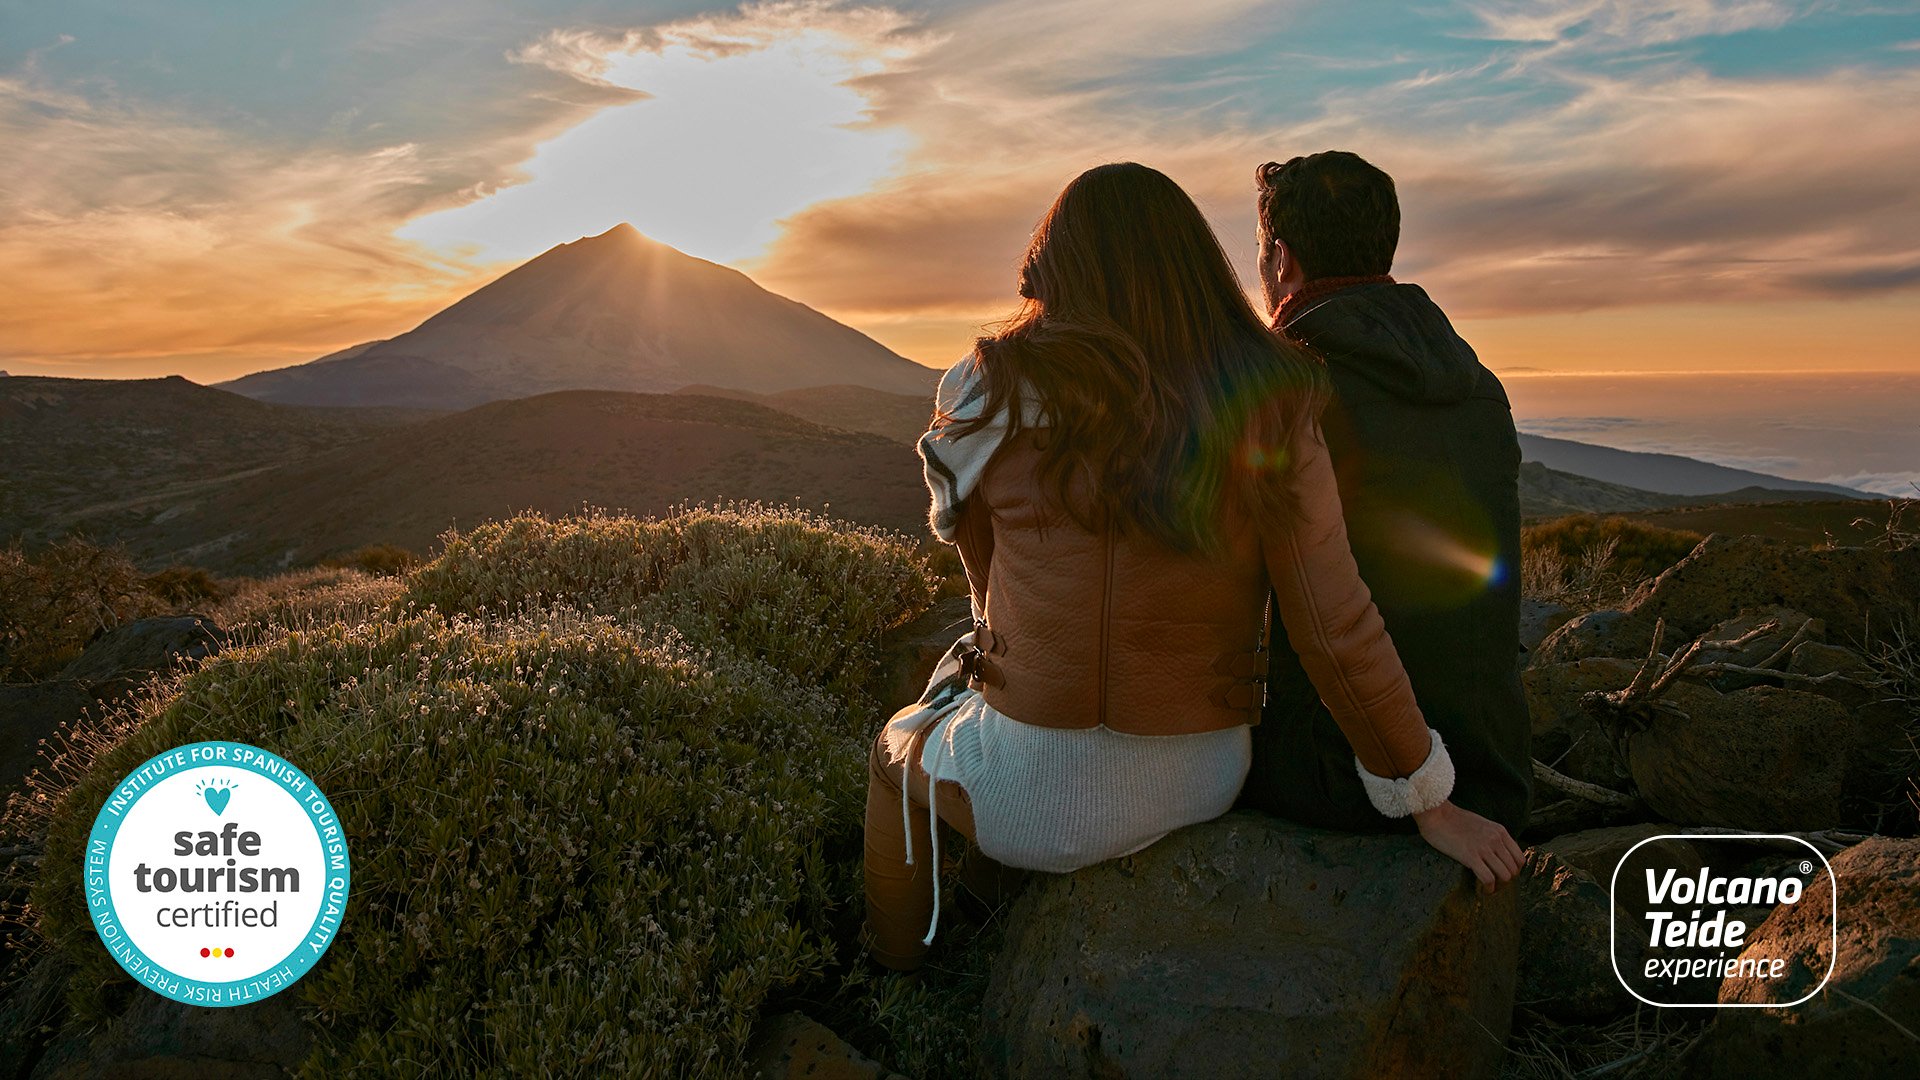 Знак Сертифицированного безопасного туризма Volcano Teide